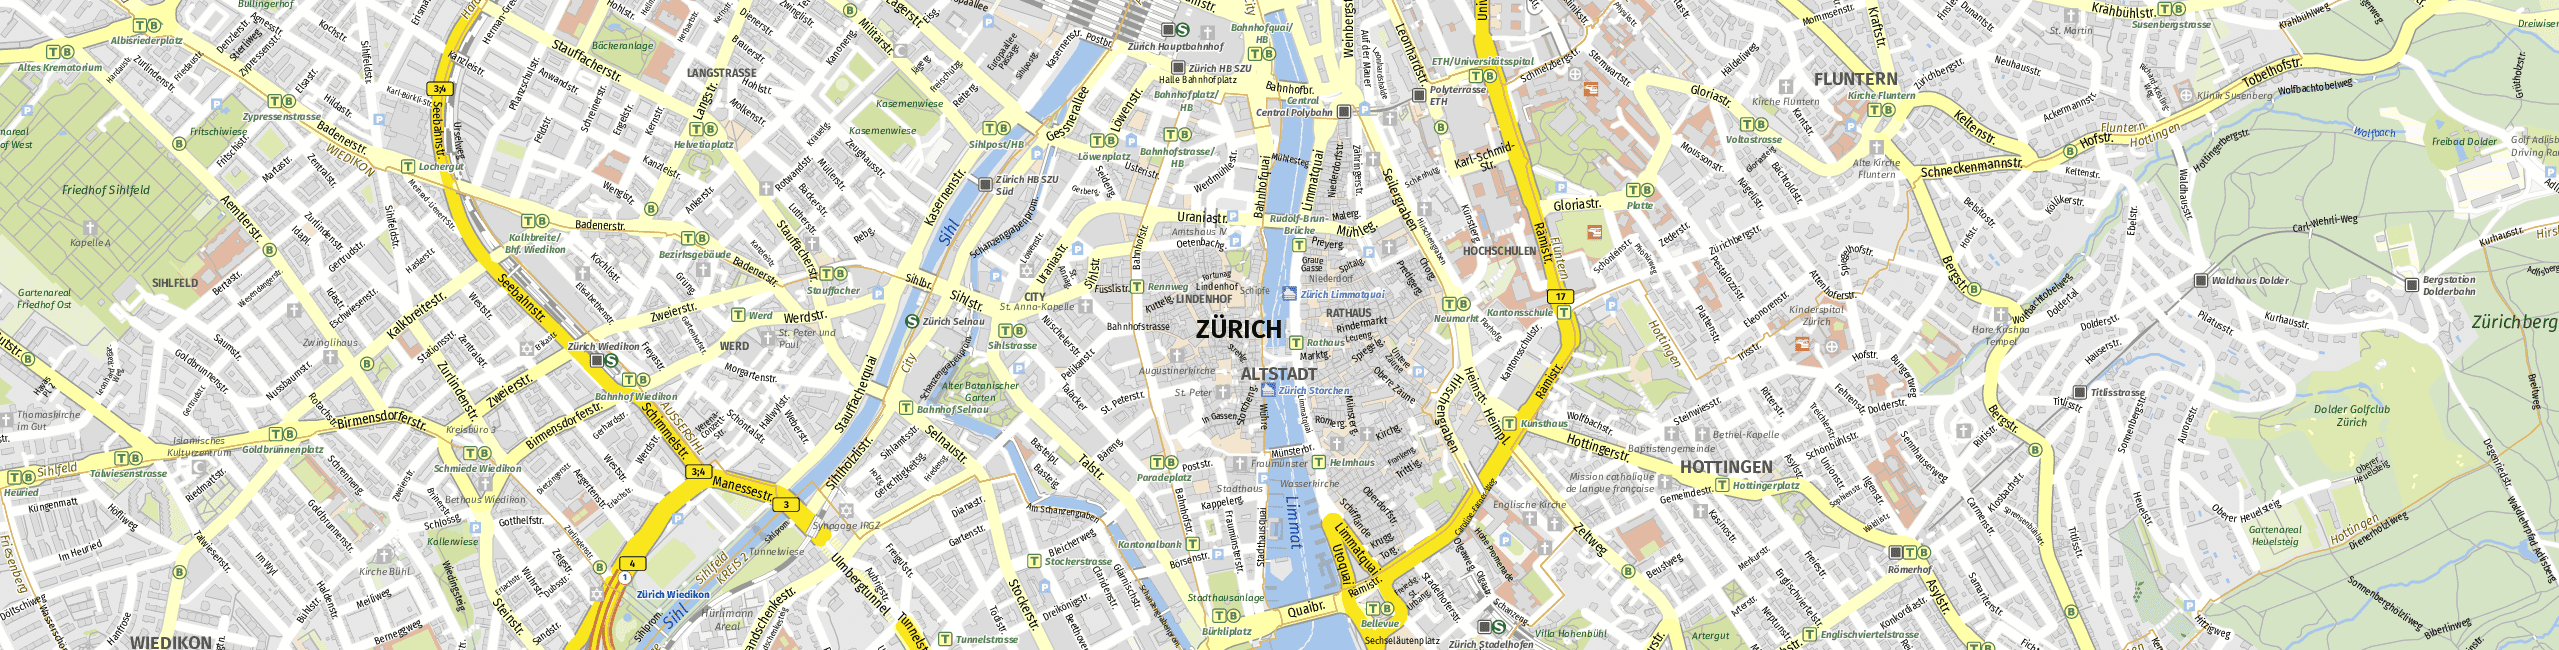 Stadtplan Zürich zum Downloaden.